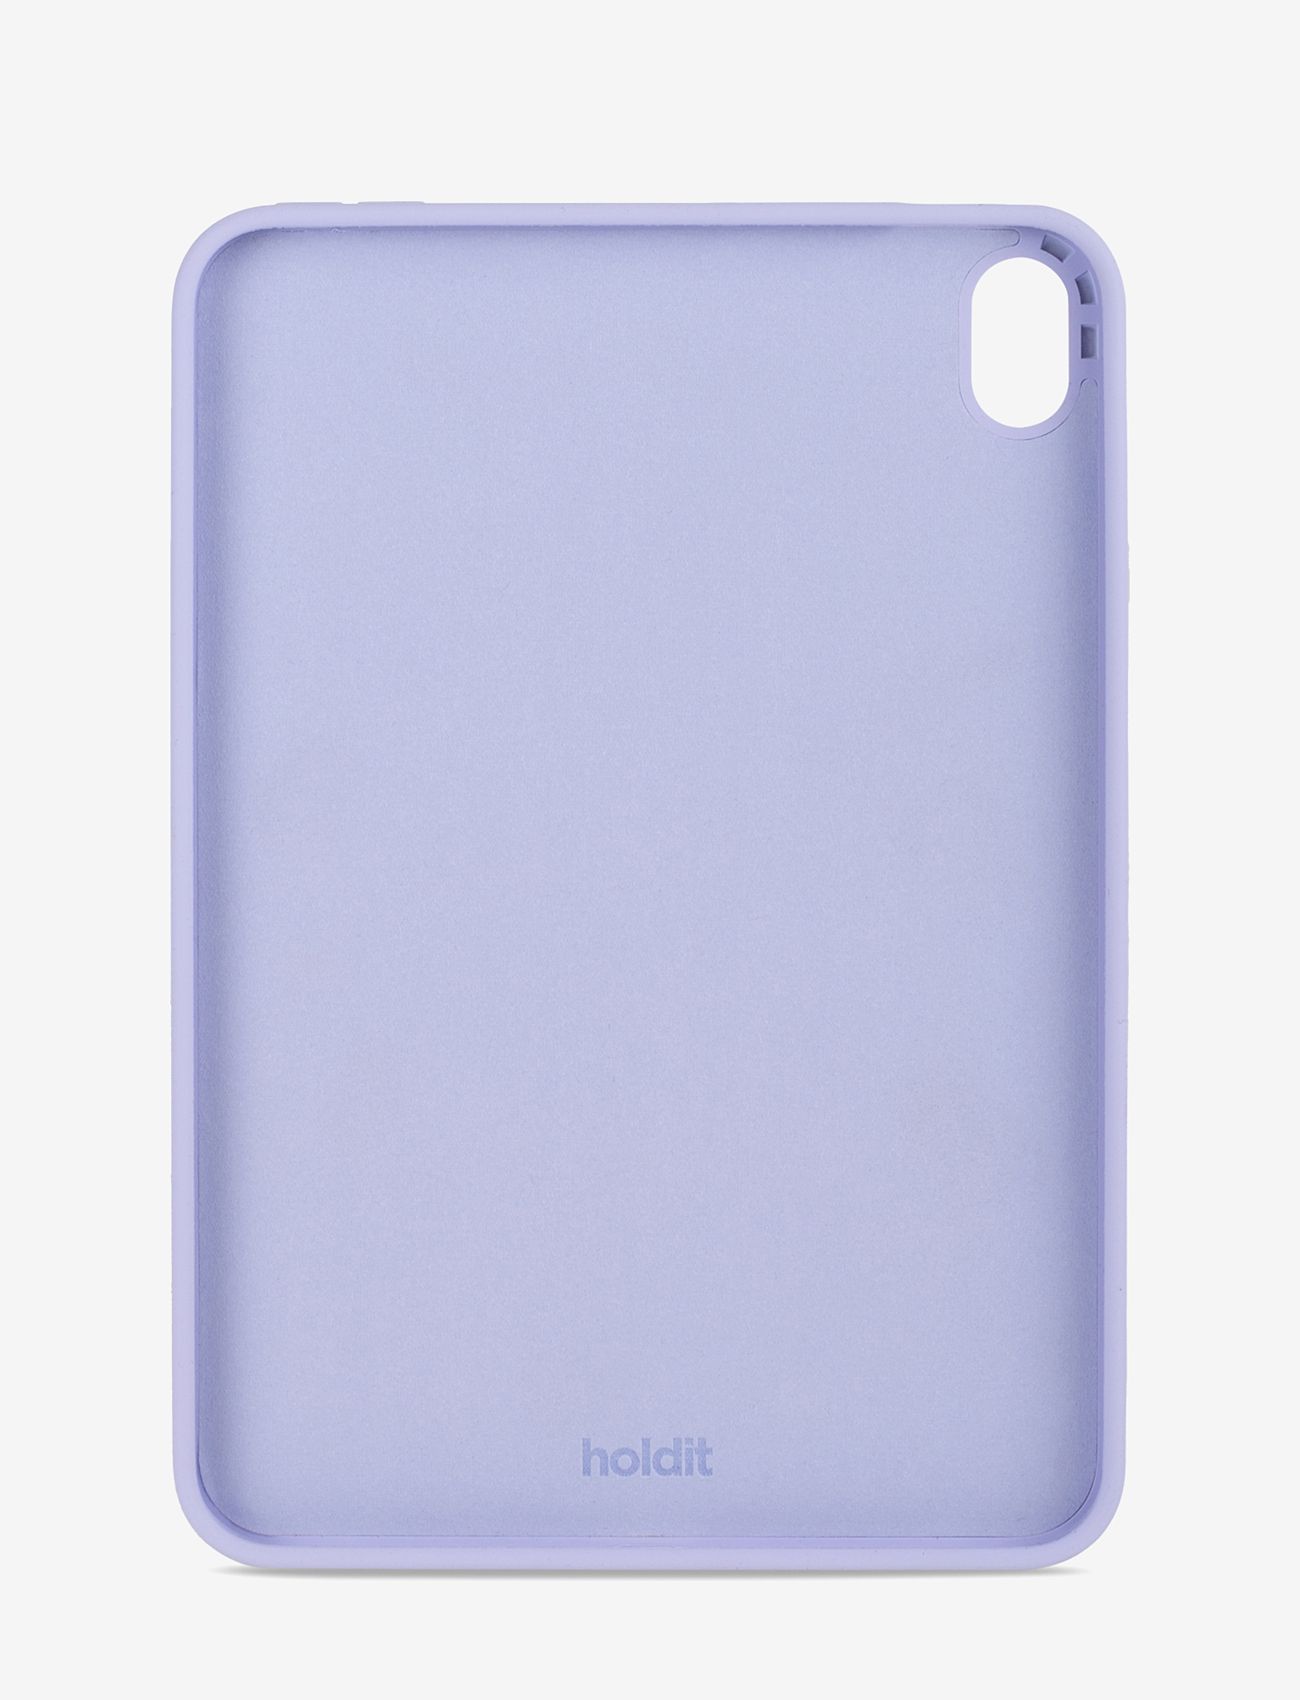 Holdit - Silicone Case iPad Mini 8.3 - die niedrigsten preise - lavender - 1